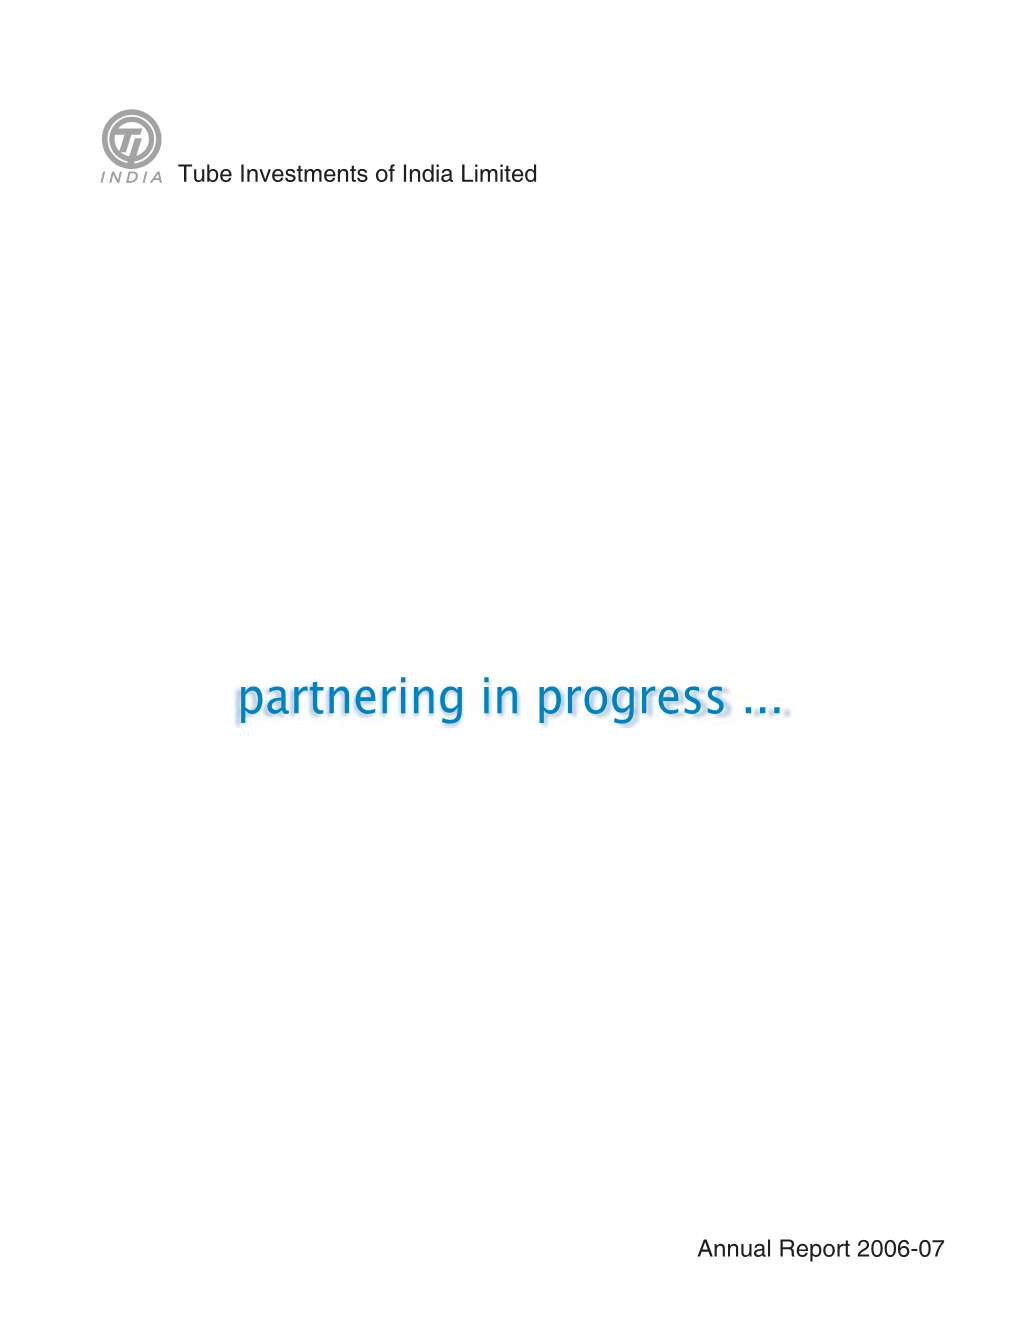 Annual Report 2006 - 07